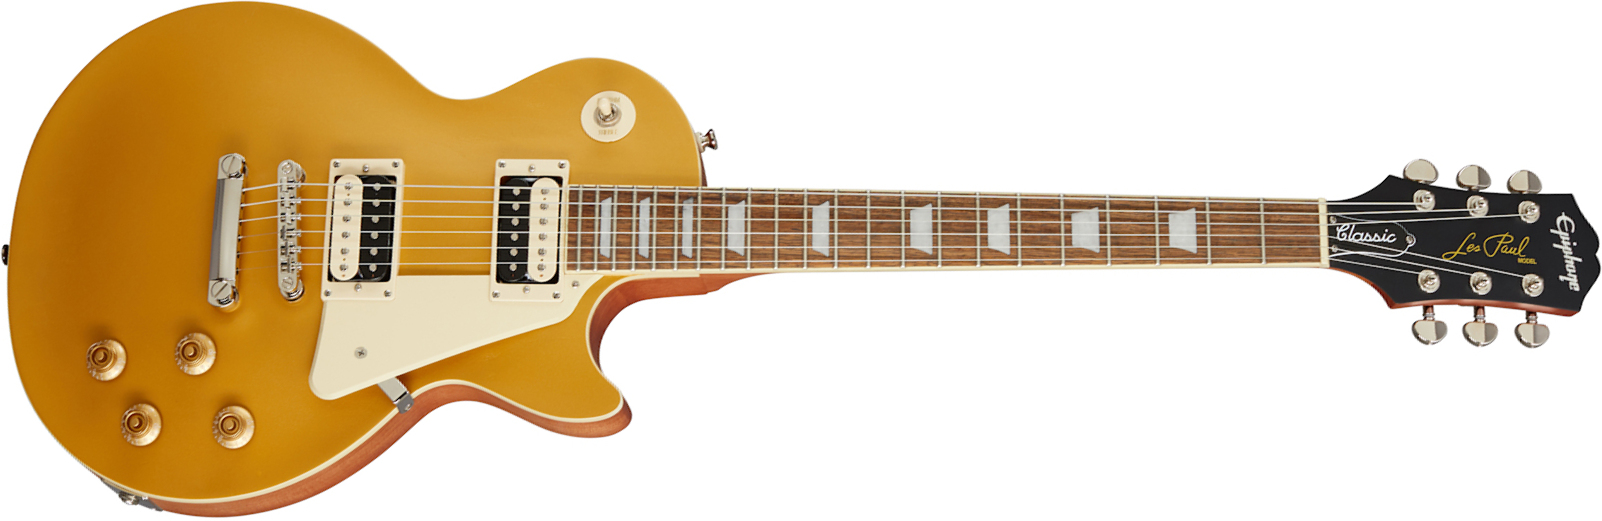 Epiphone Les Paul Classic Worn 2020 Hh Ht Rw - Worn Metallic Gold - Guitarra eléctrica de corte único. - Main picture